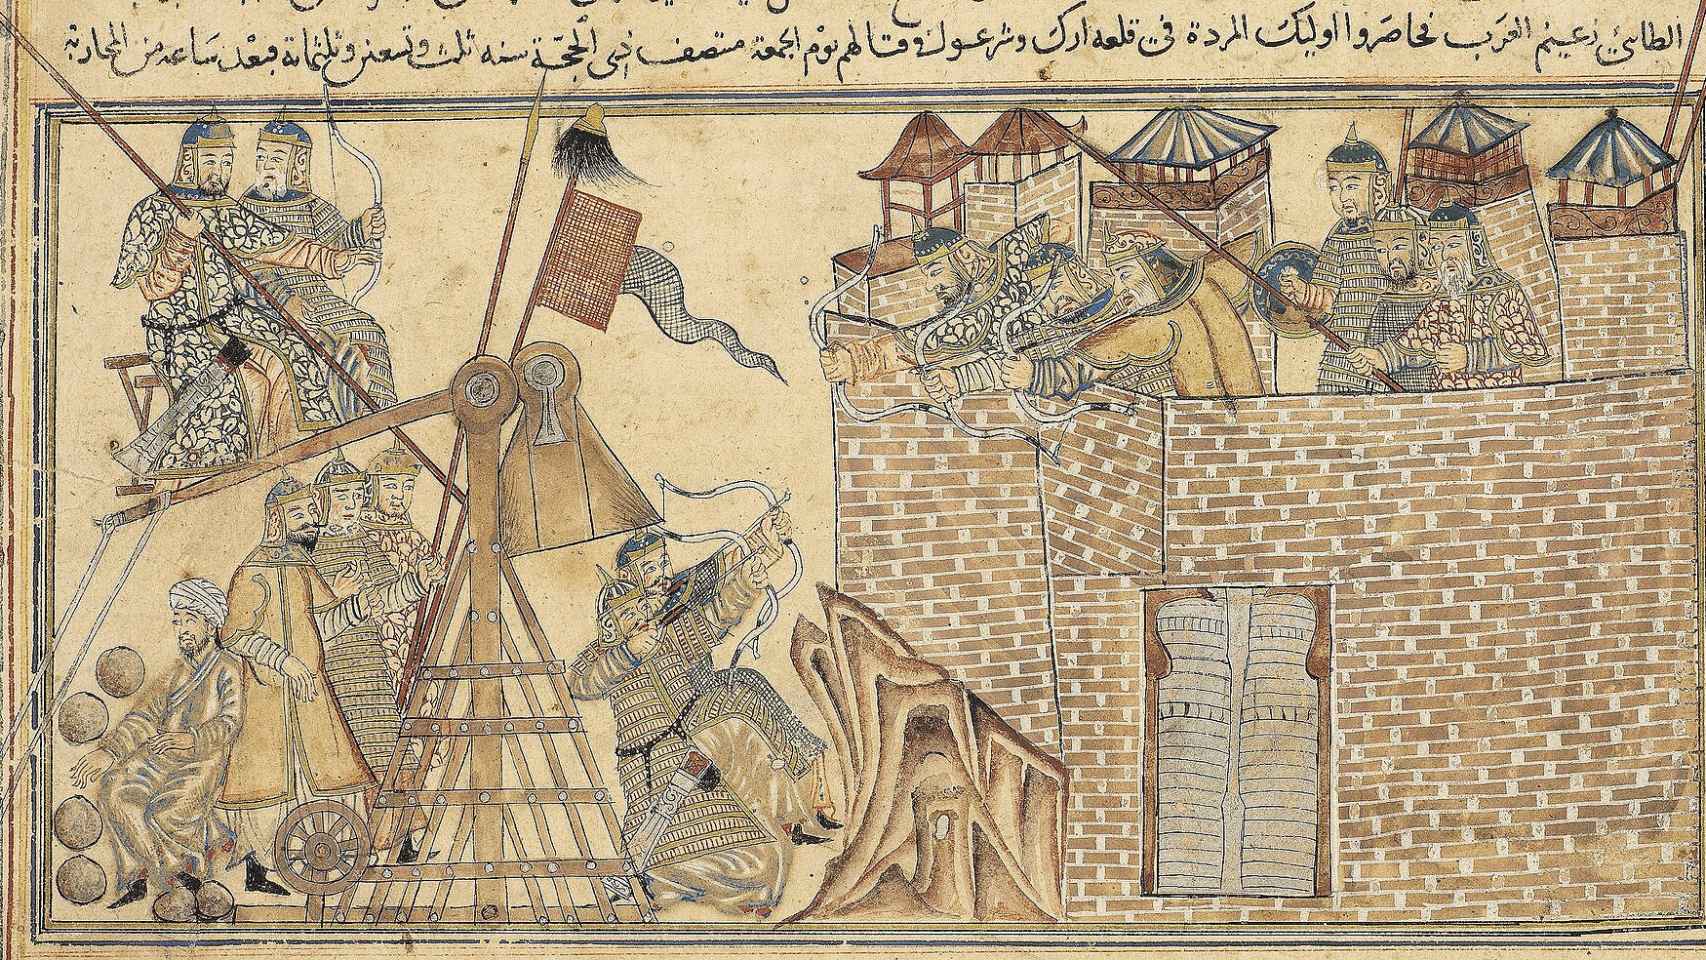 Miniatura islámica que muestra un asedio mongol en el siglo XIV.